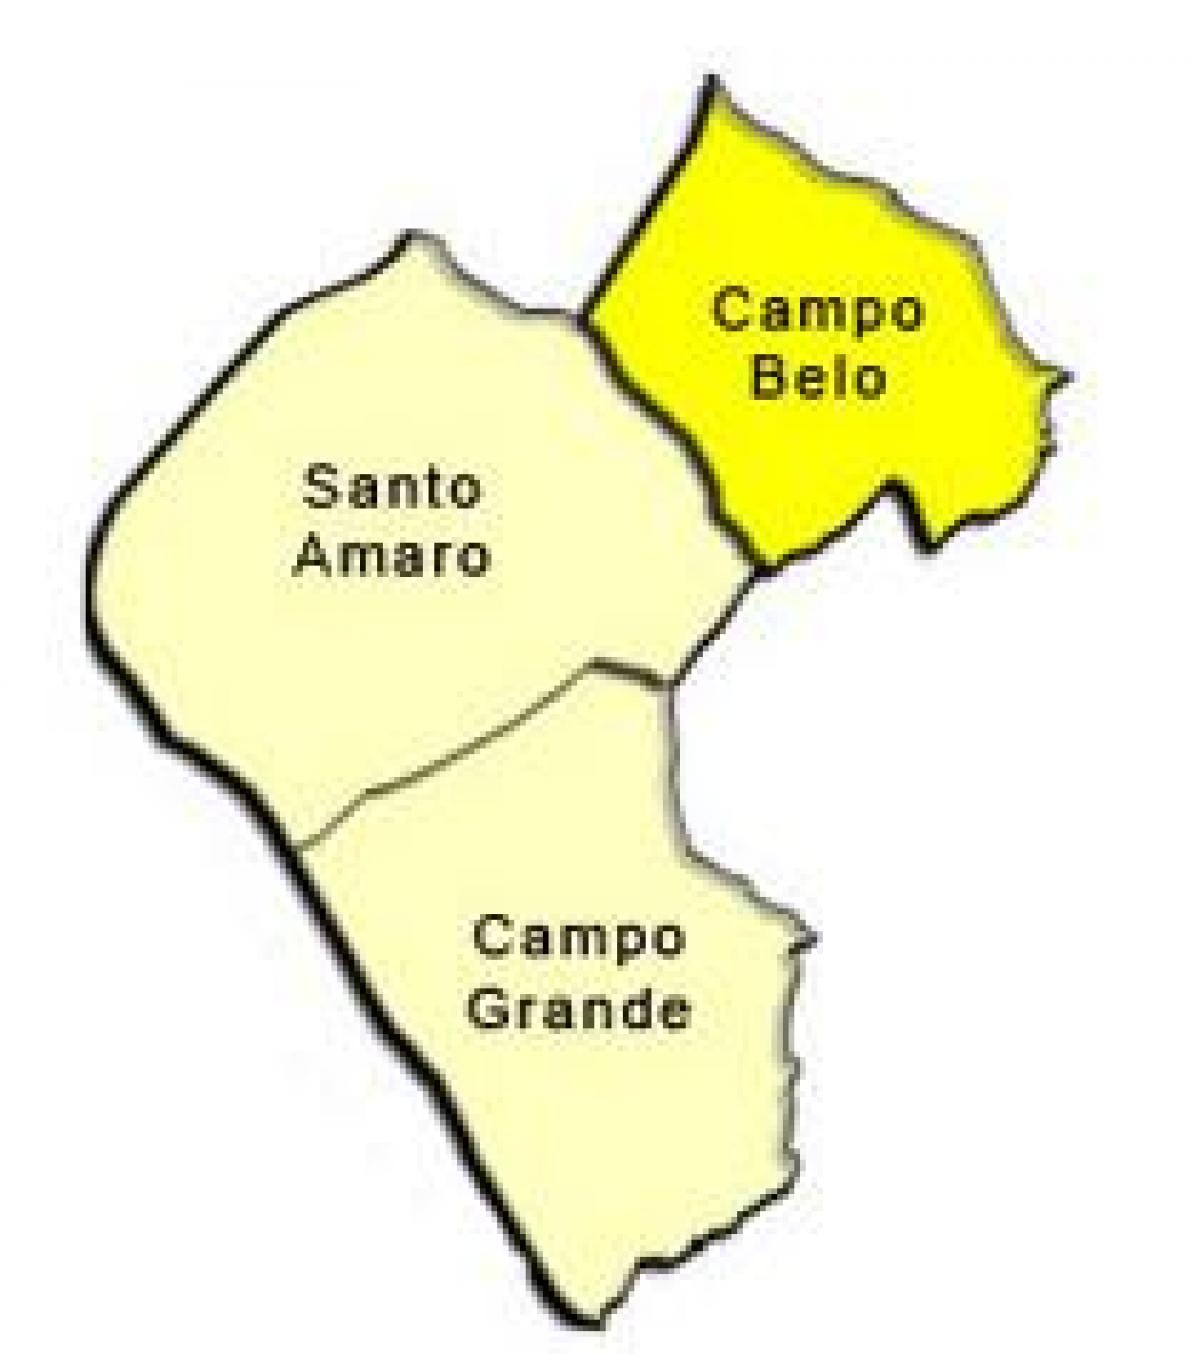 نقشه سانتو عمرو آدور